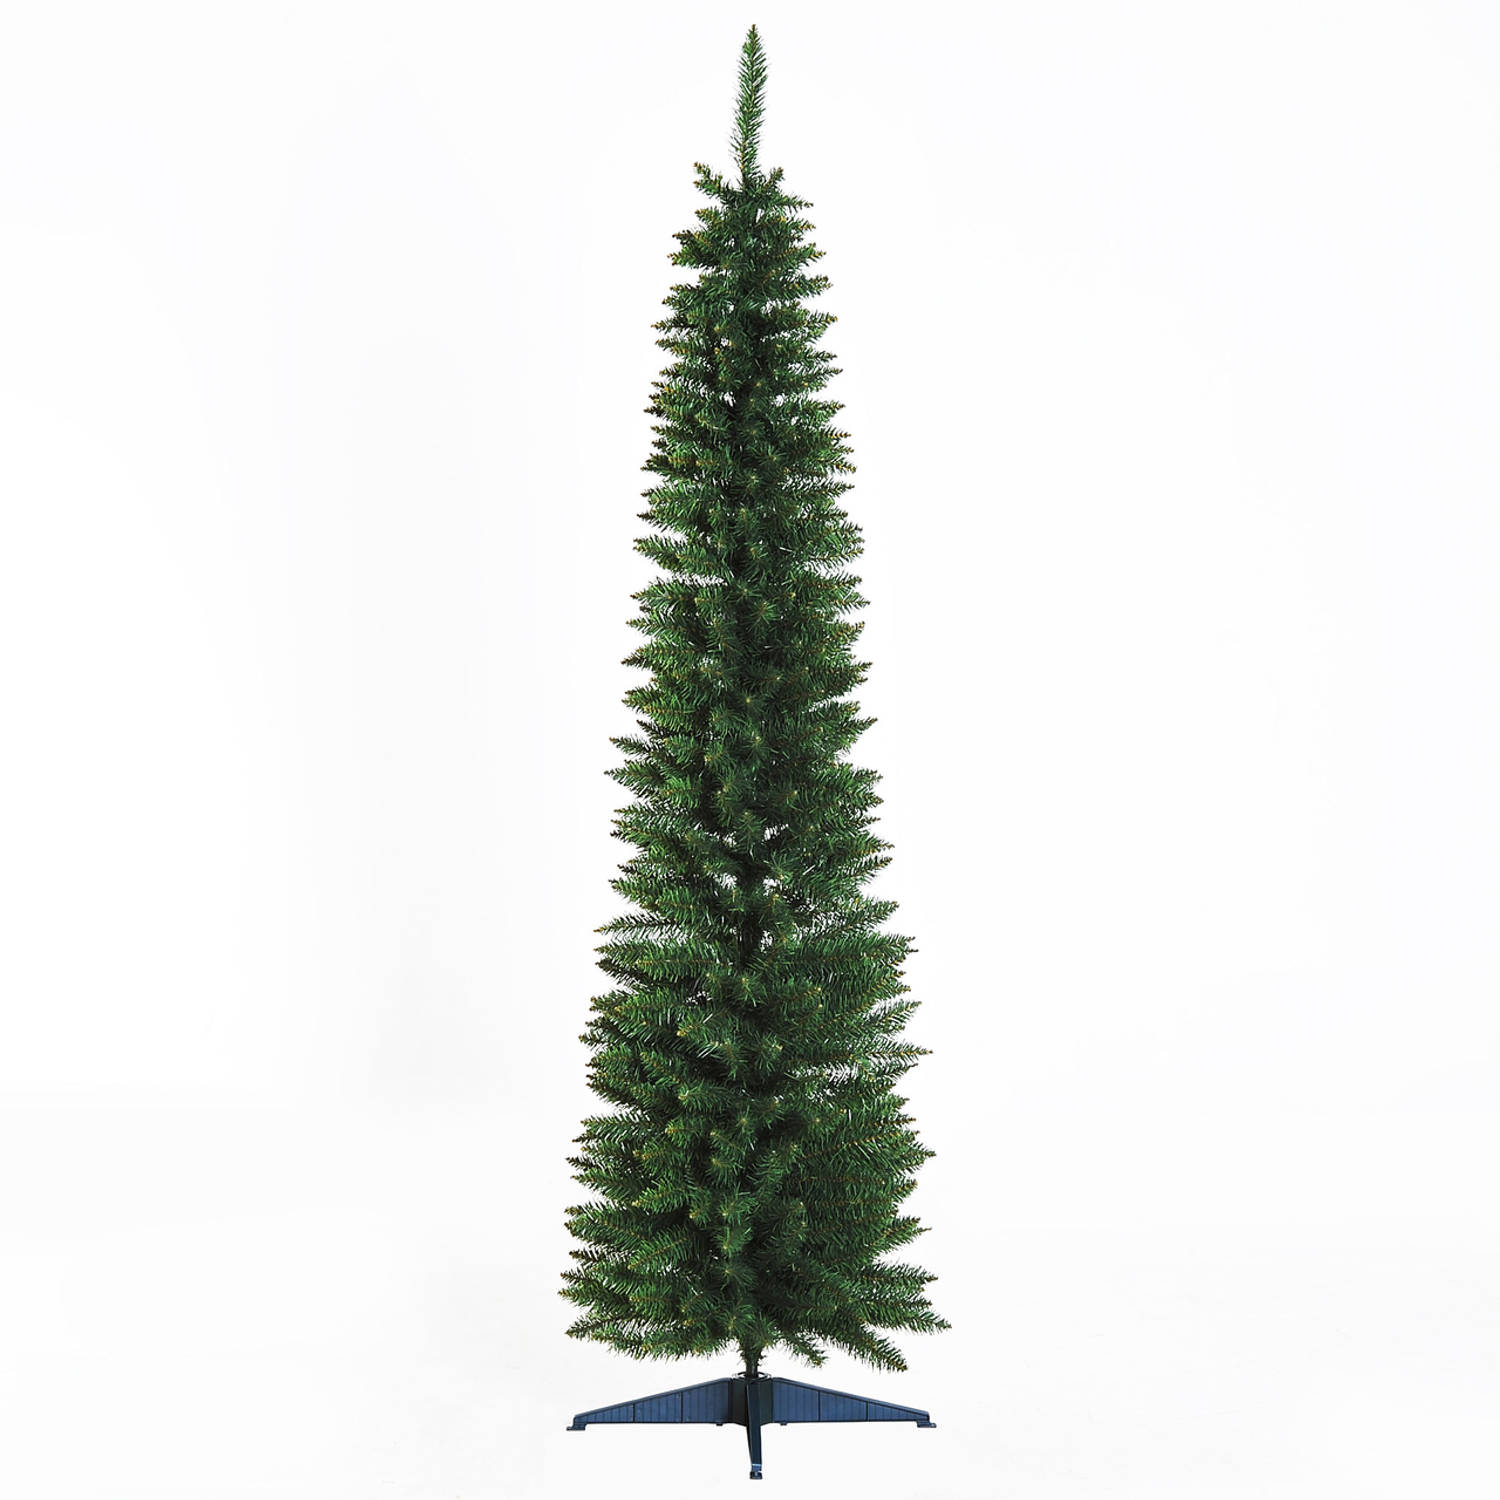 Christmasgoodz - Kunstkerstboom - Smalle Kunstkerstboom - Smalle Kerstboom - 180 Cm